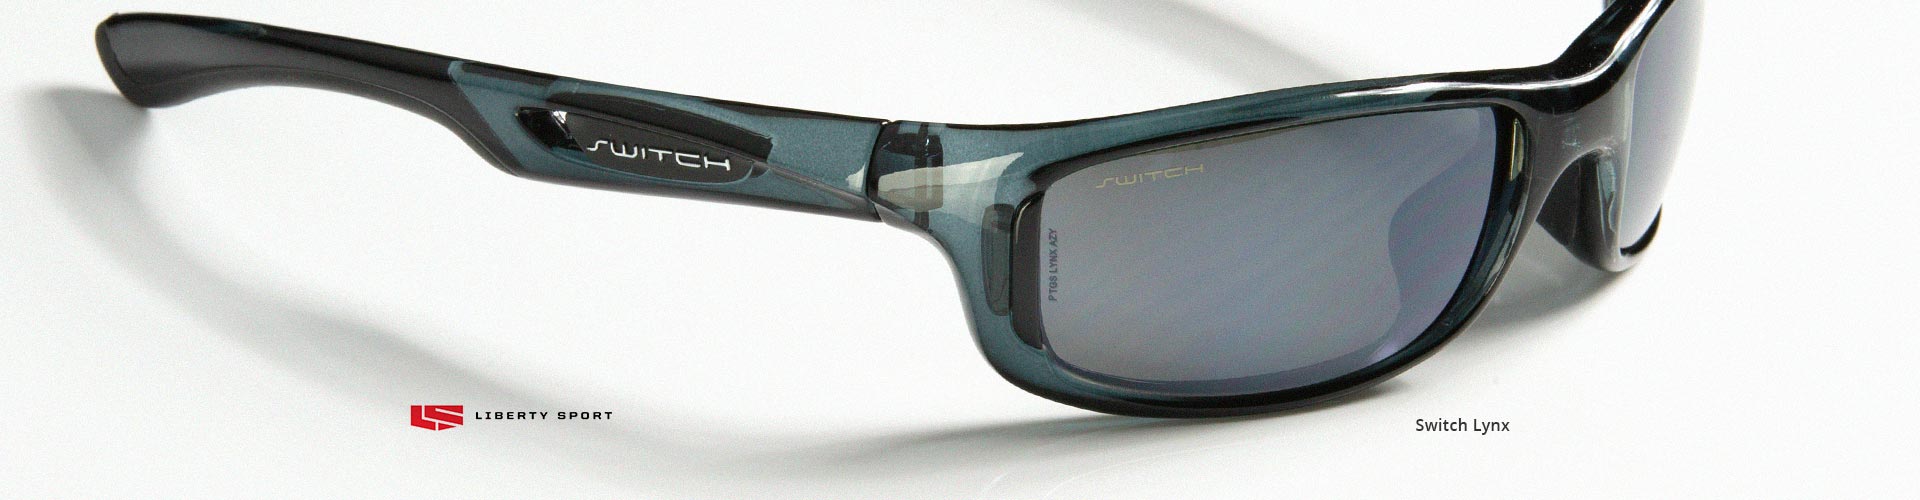 Shop Rec Specs Liberty Sport Eyeglasses & Sunglasses - model Switch Lynx featured